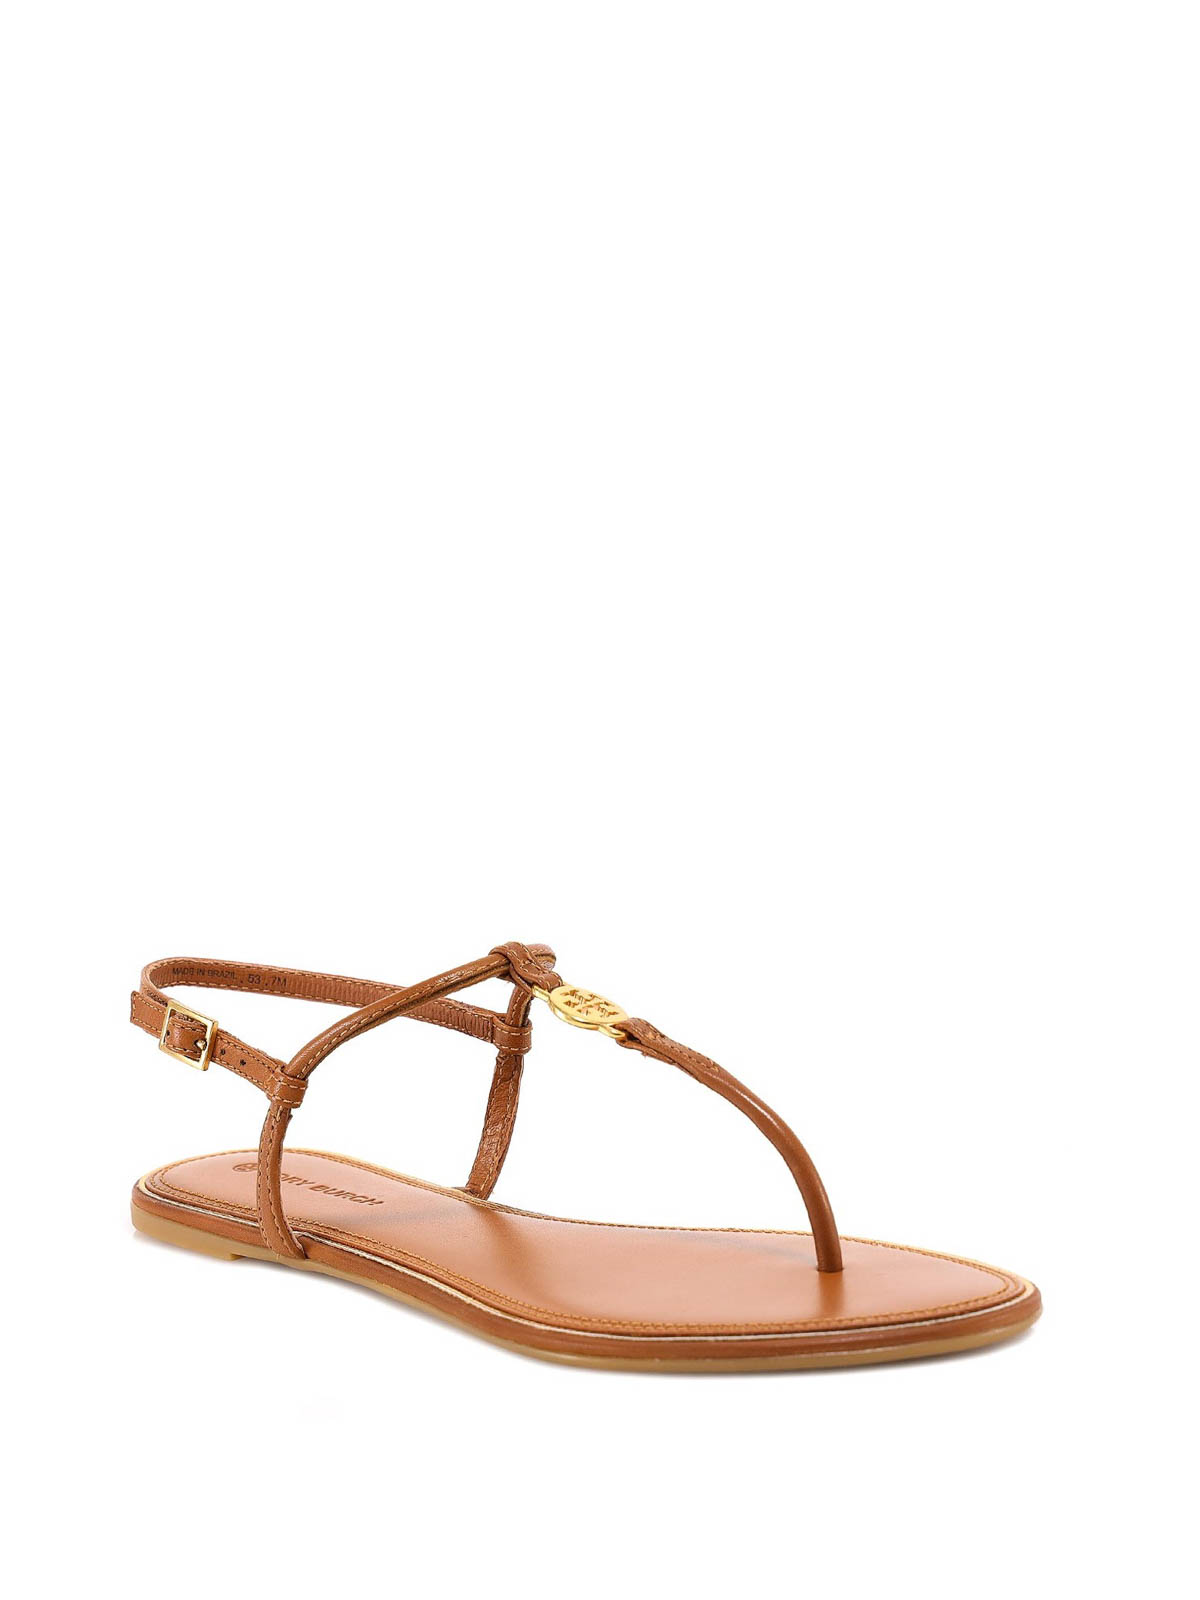 Sandals Tory Burch - Emmy sandals - 63407905 | Shop online at iKRIX